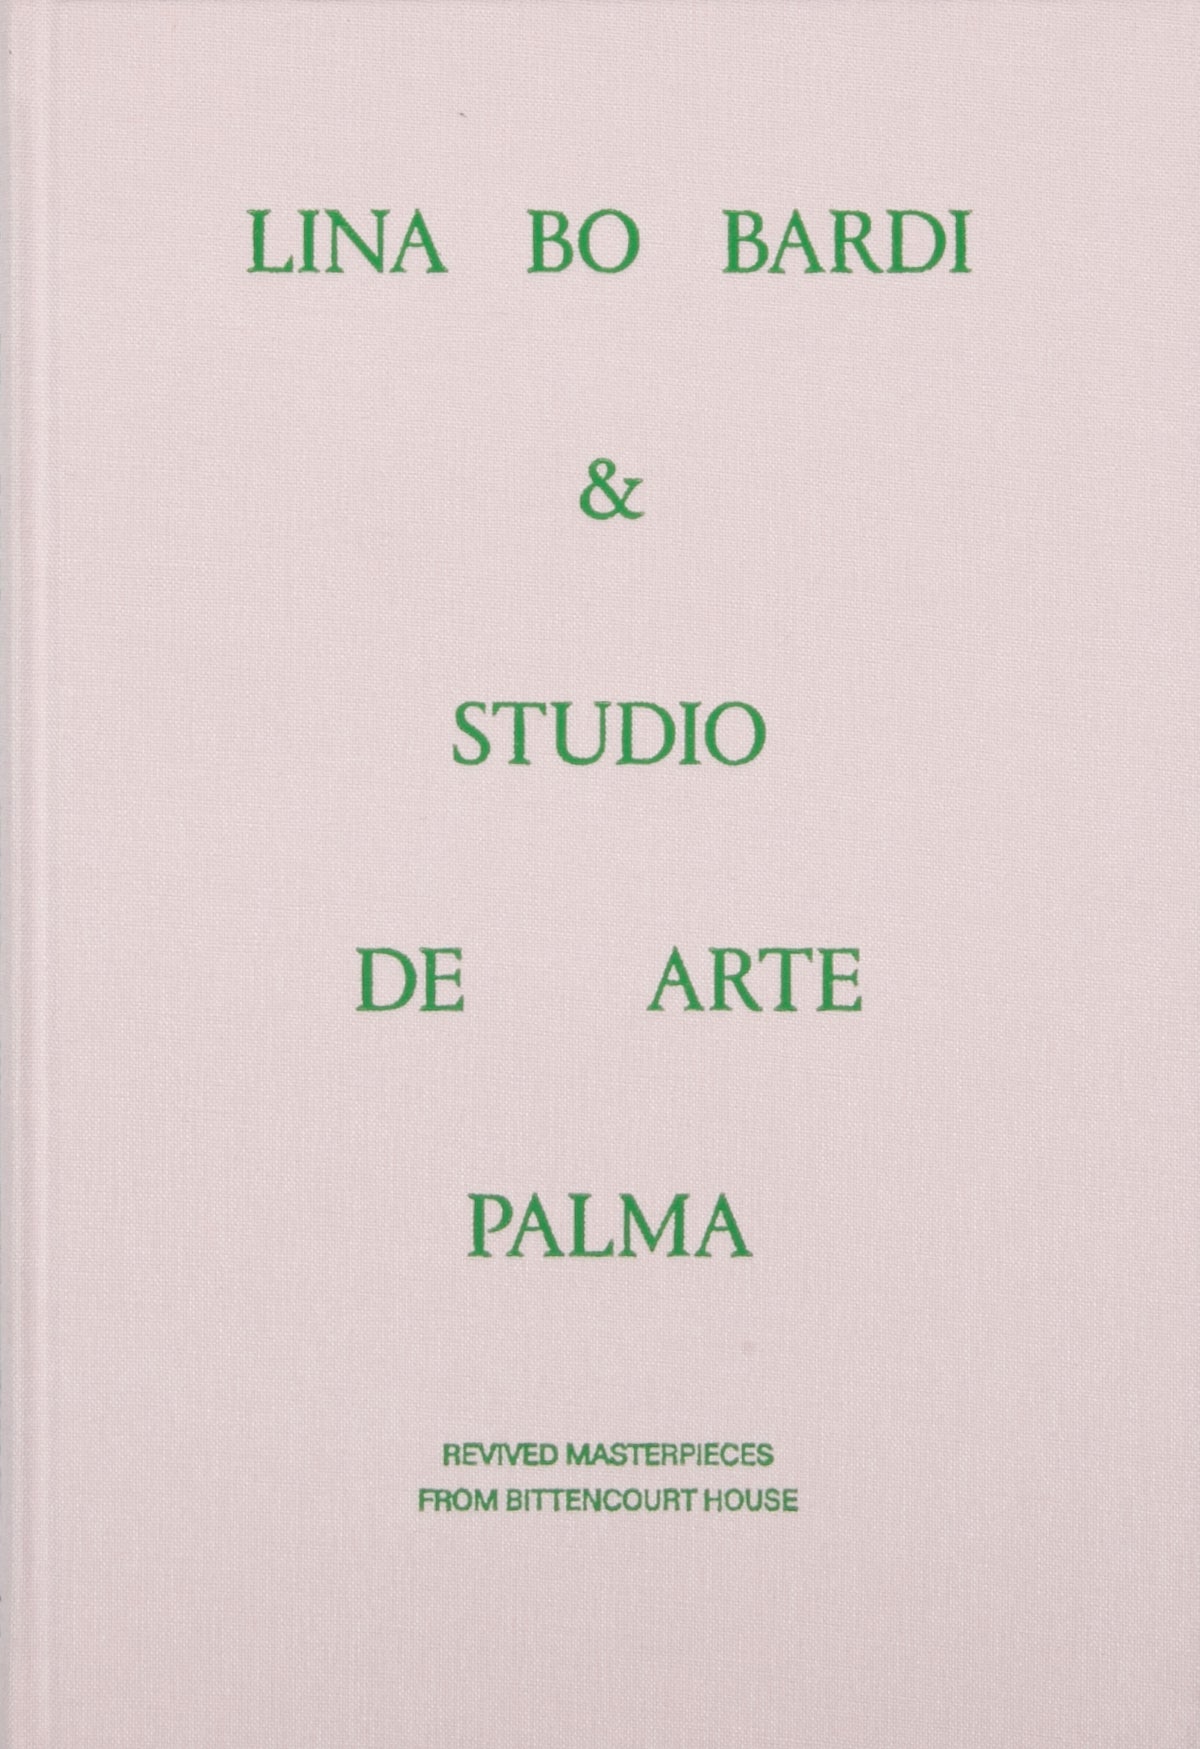 Lina Bo Bardi, Studio de Arte Palma: Revived Masterpieces from Bittencourt House